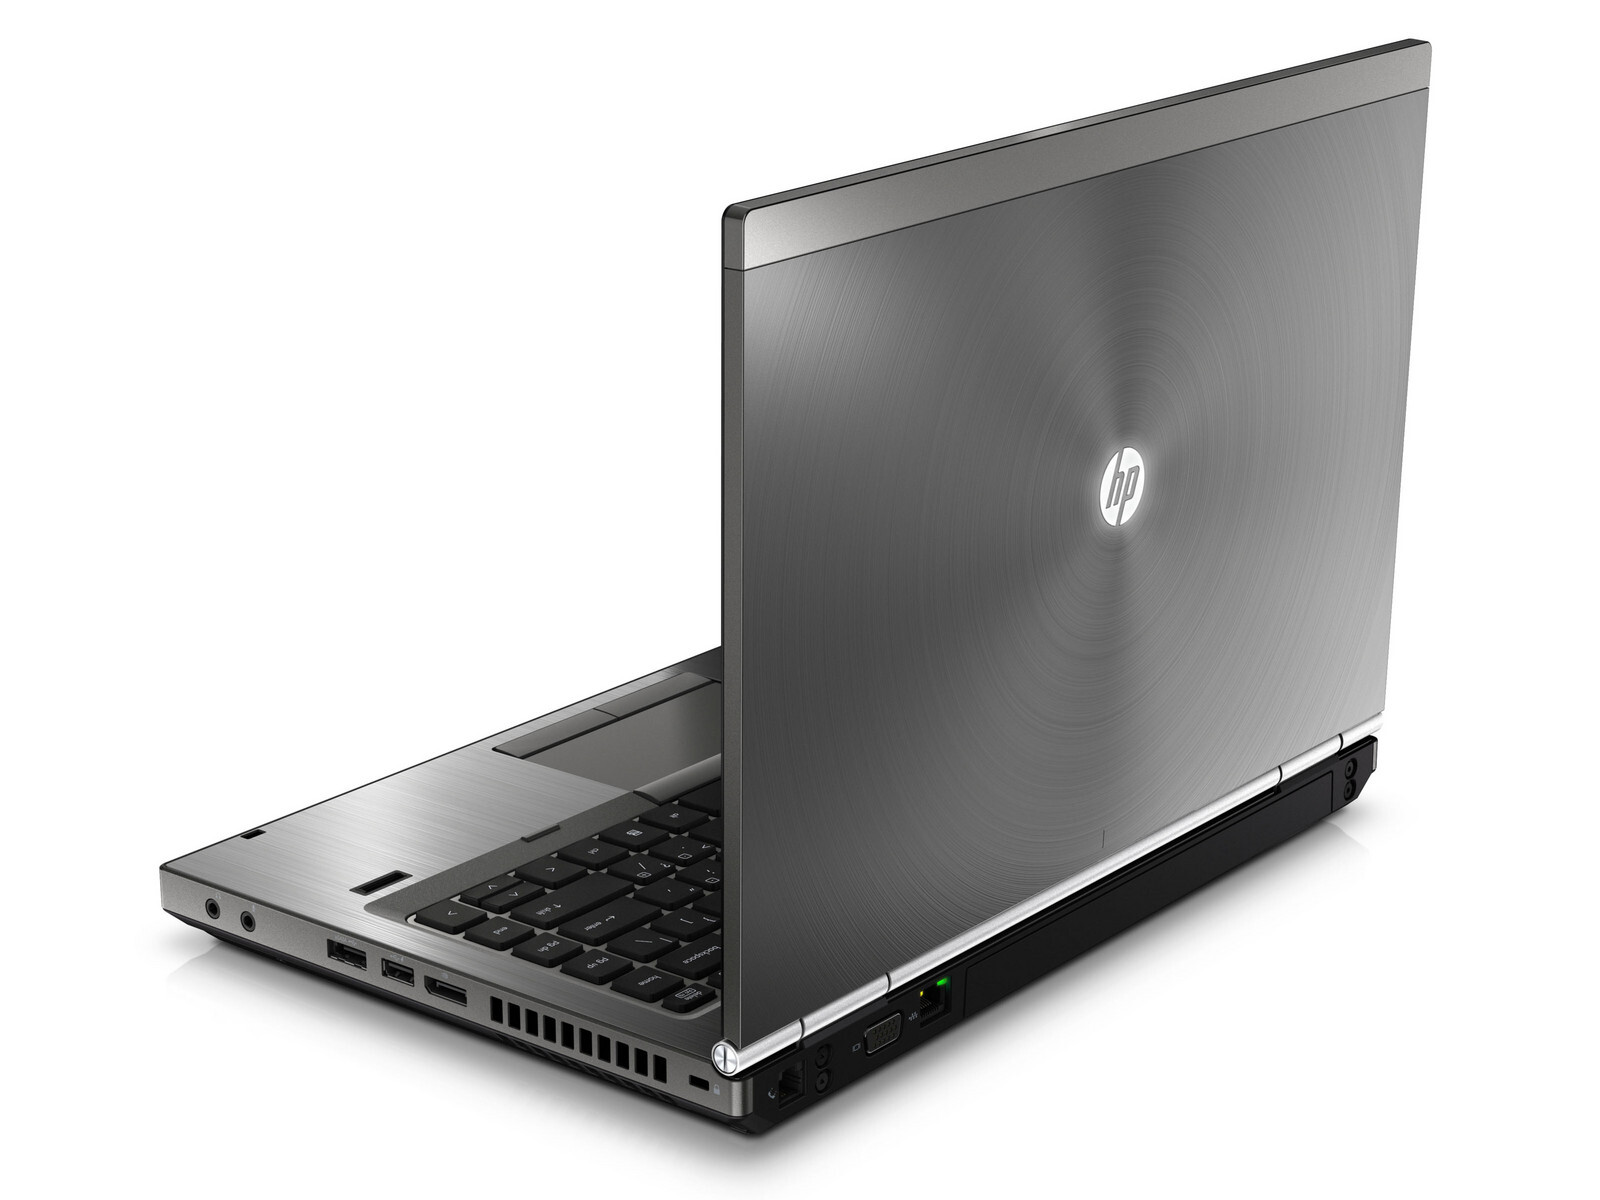 HP EliteBook 8460p Intel i7 2720QM 2.20GHz 4GB RAM 256GB SSD 14" NO OS - B Grade Image 1